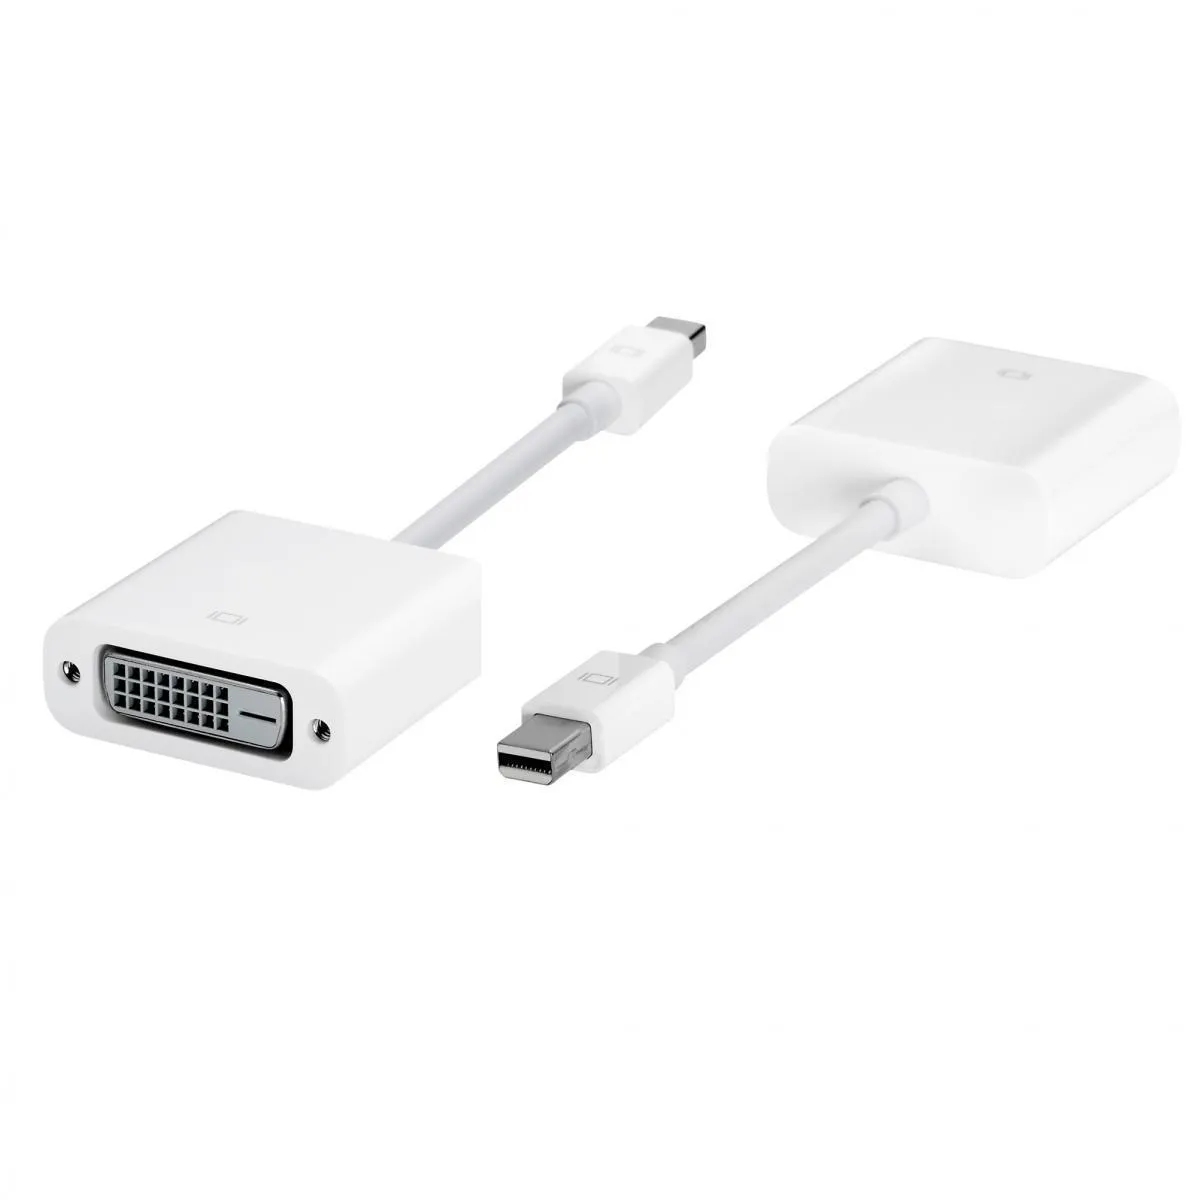 фото Адаптер Apple Mini Display Port (Thunderbolt) на DVI Adapter 15 см (белый) MB570